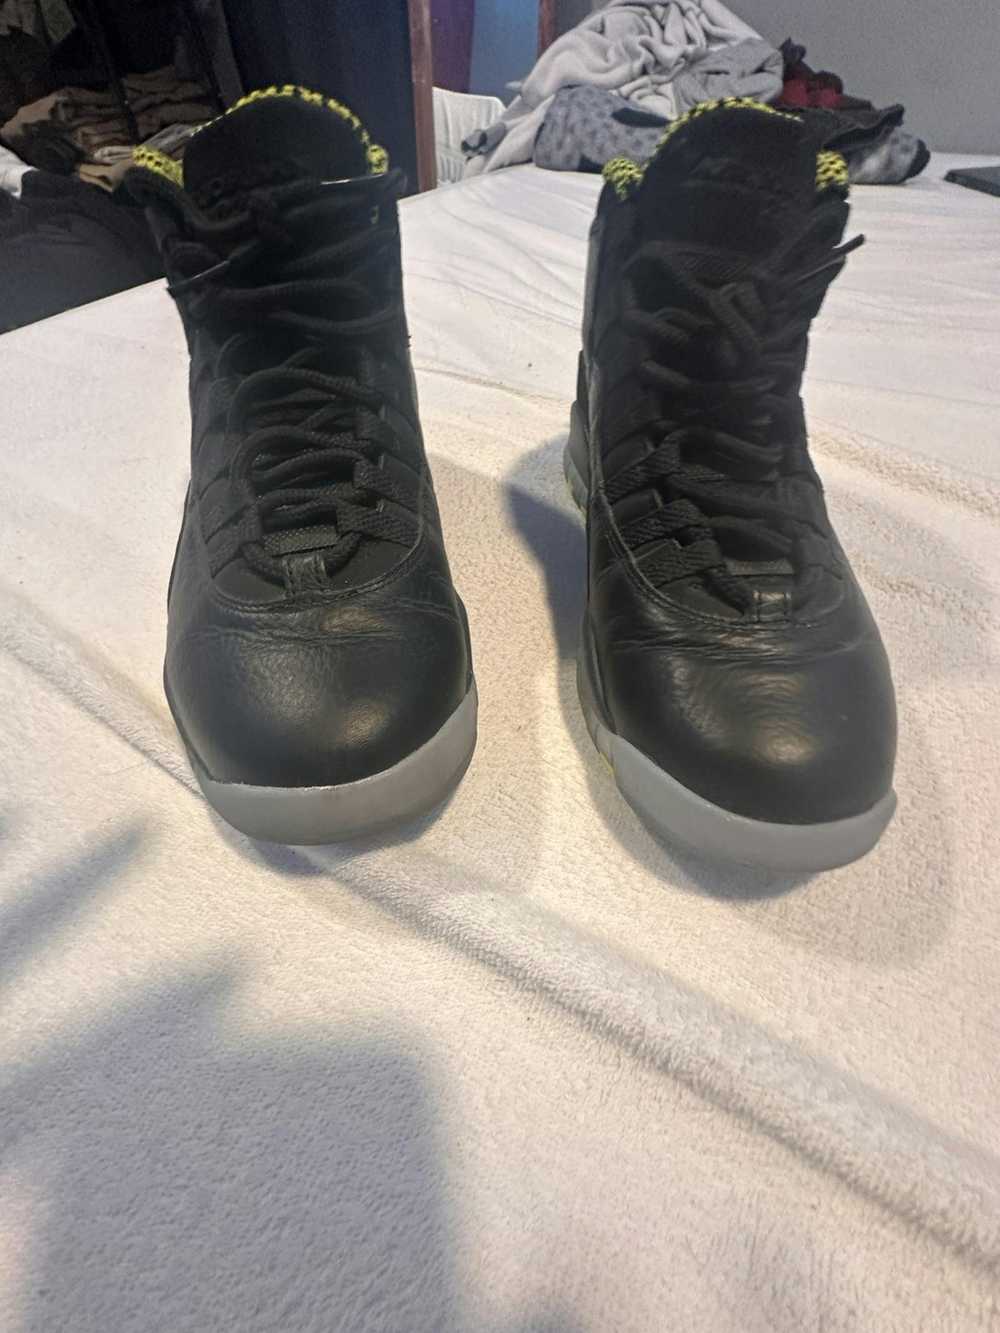 Jordan Brand × Nike Jordan retro 10 venoms - image 9